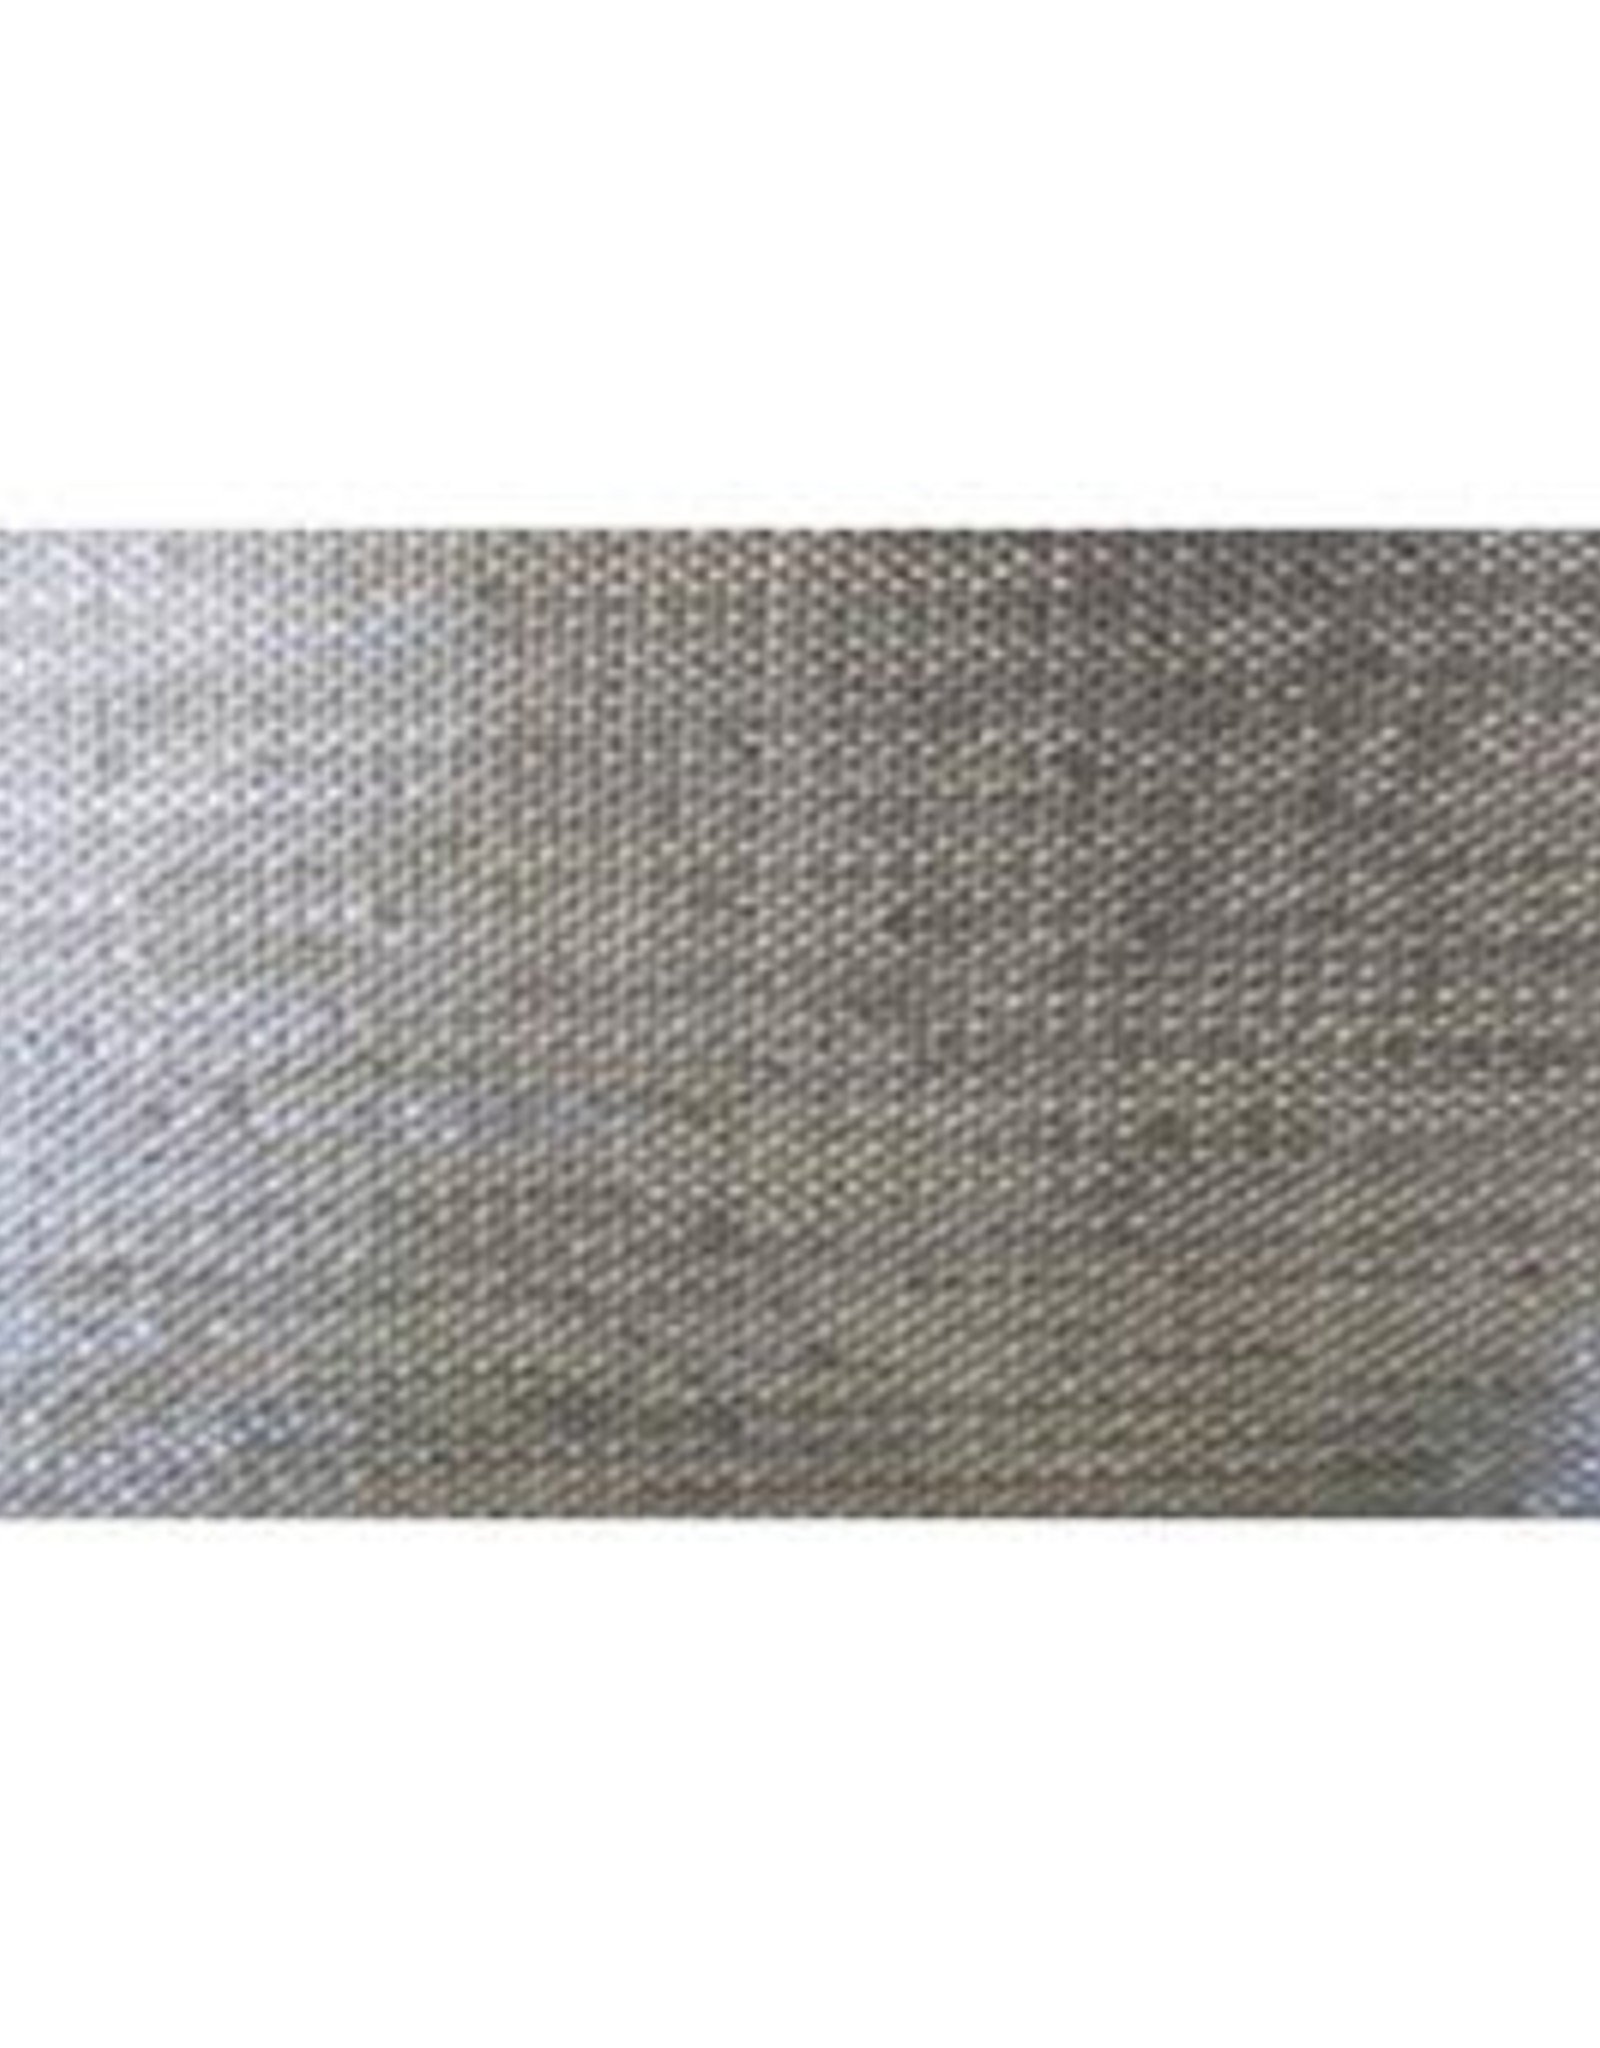 Mirafi 500X, Woven Geotextile Fabric,  SZ. 12.5' x 432'